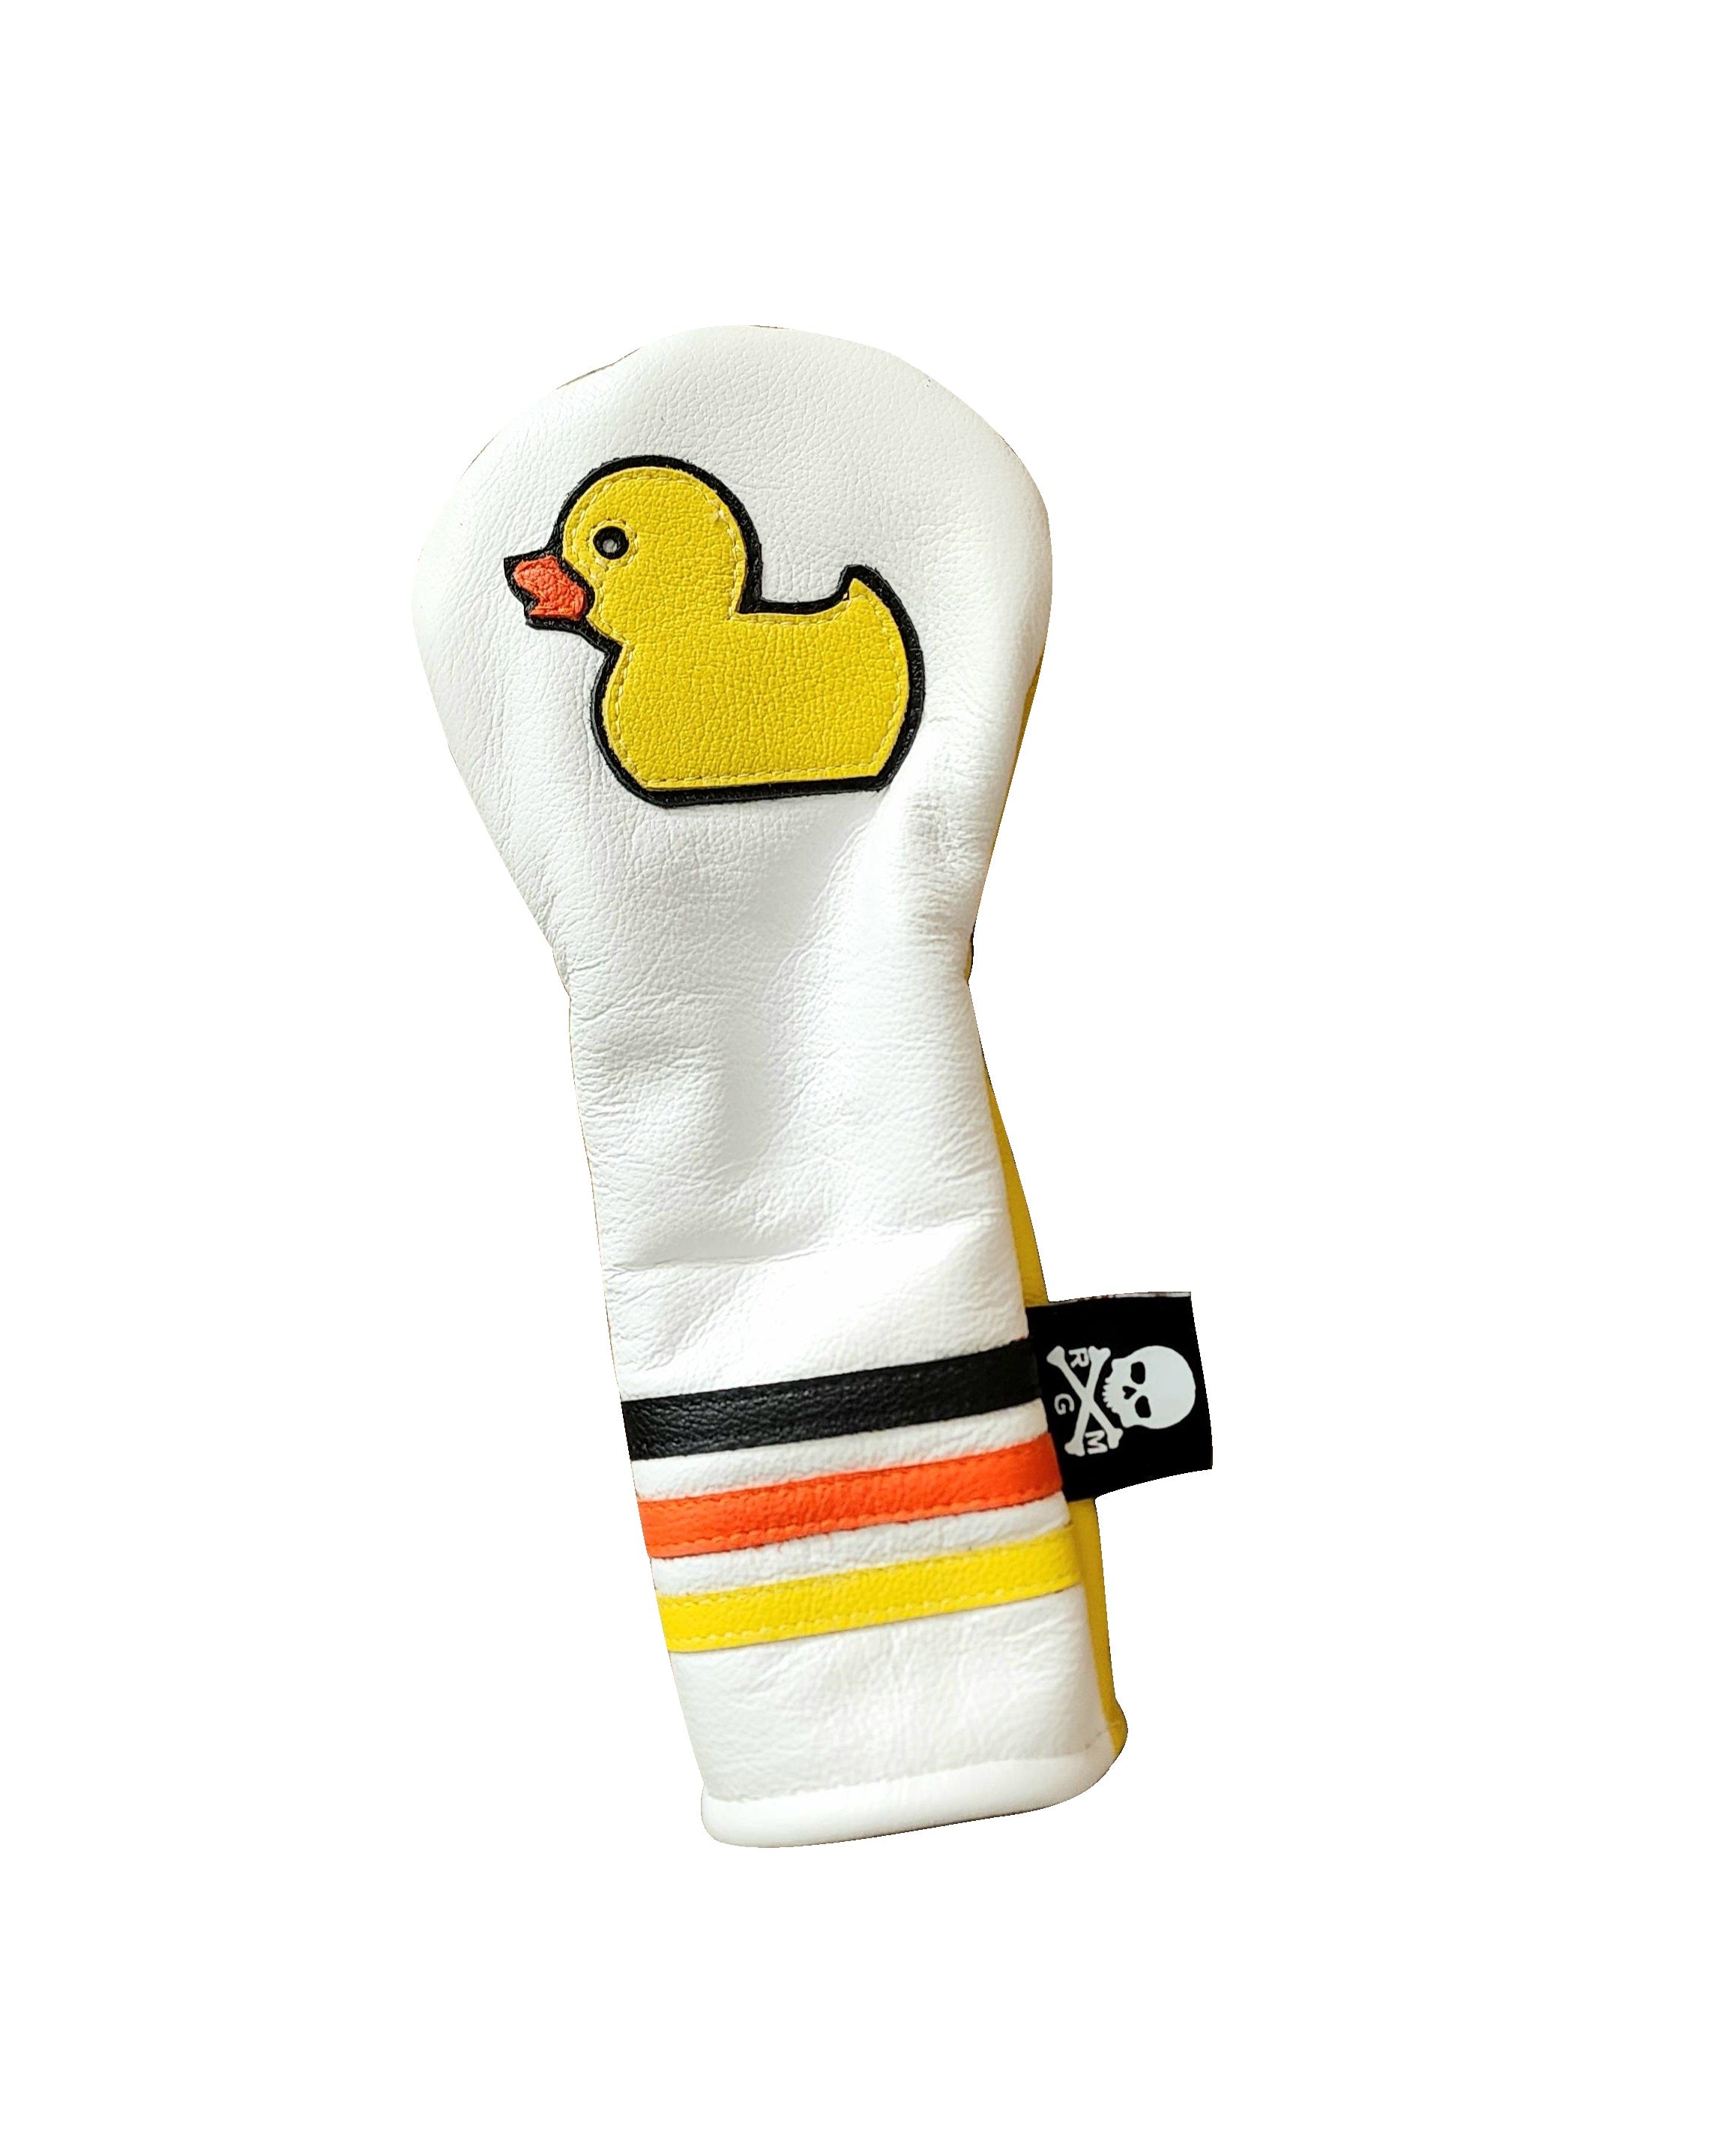 Limited Edition! Rubber Duck Headcover! - Robert Mark Golf